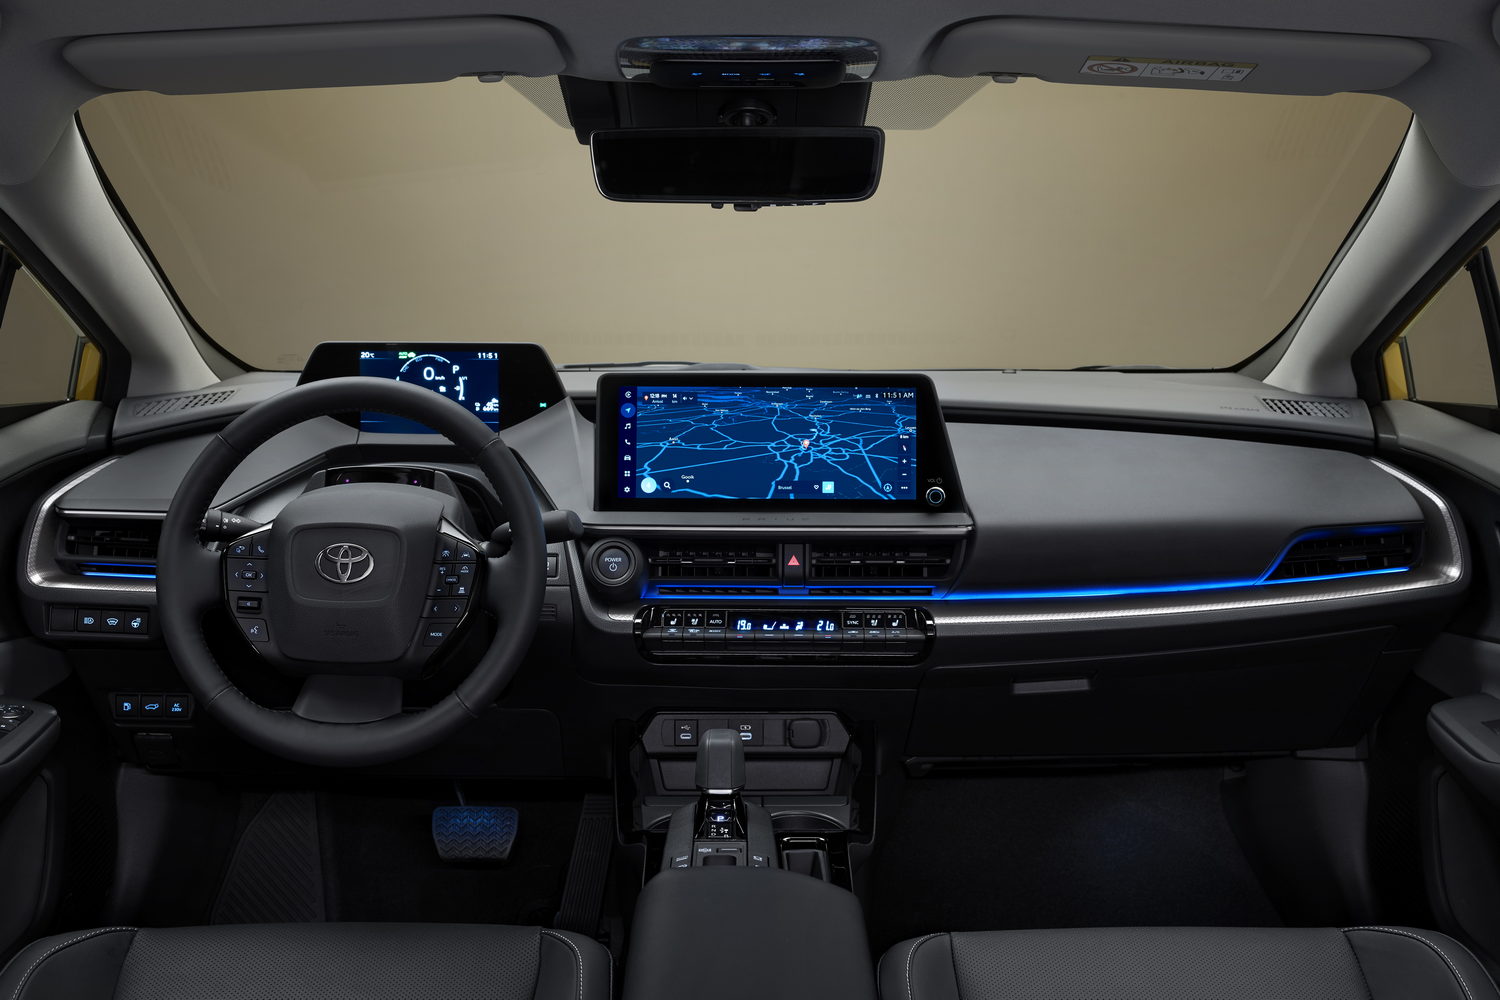 Toyota shows off 2023 hybrid Prius